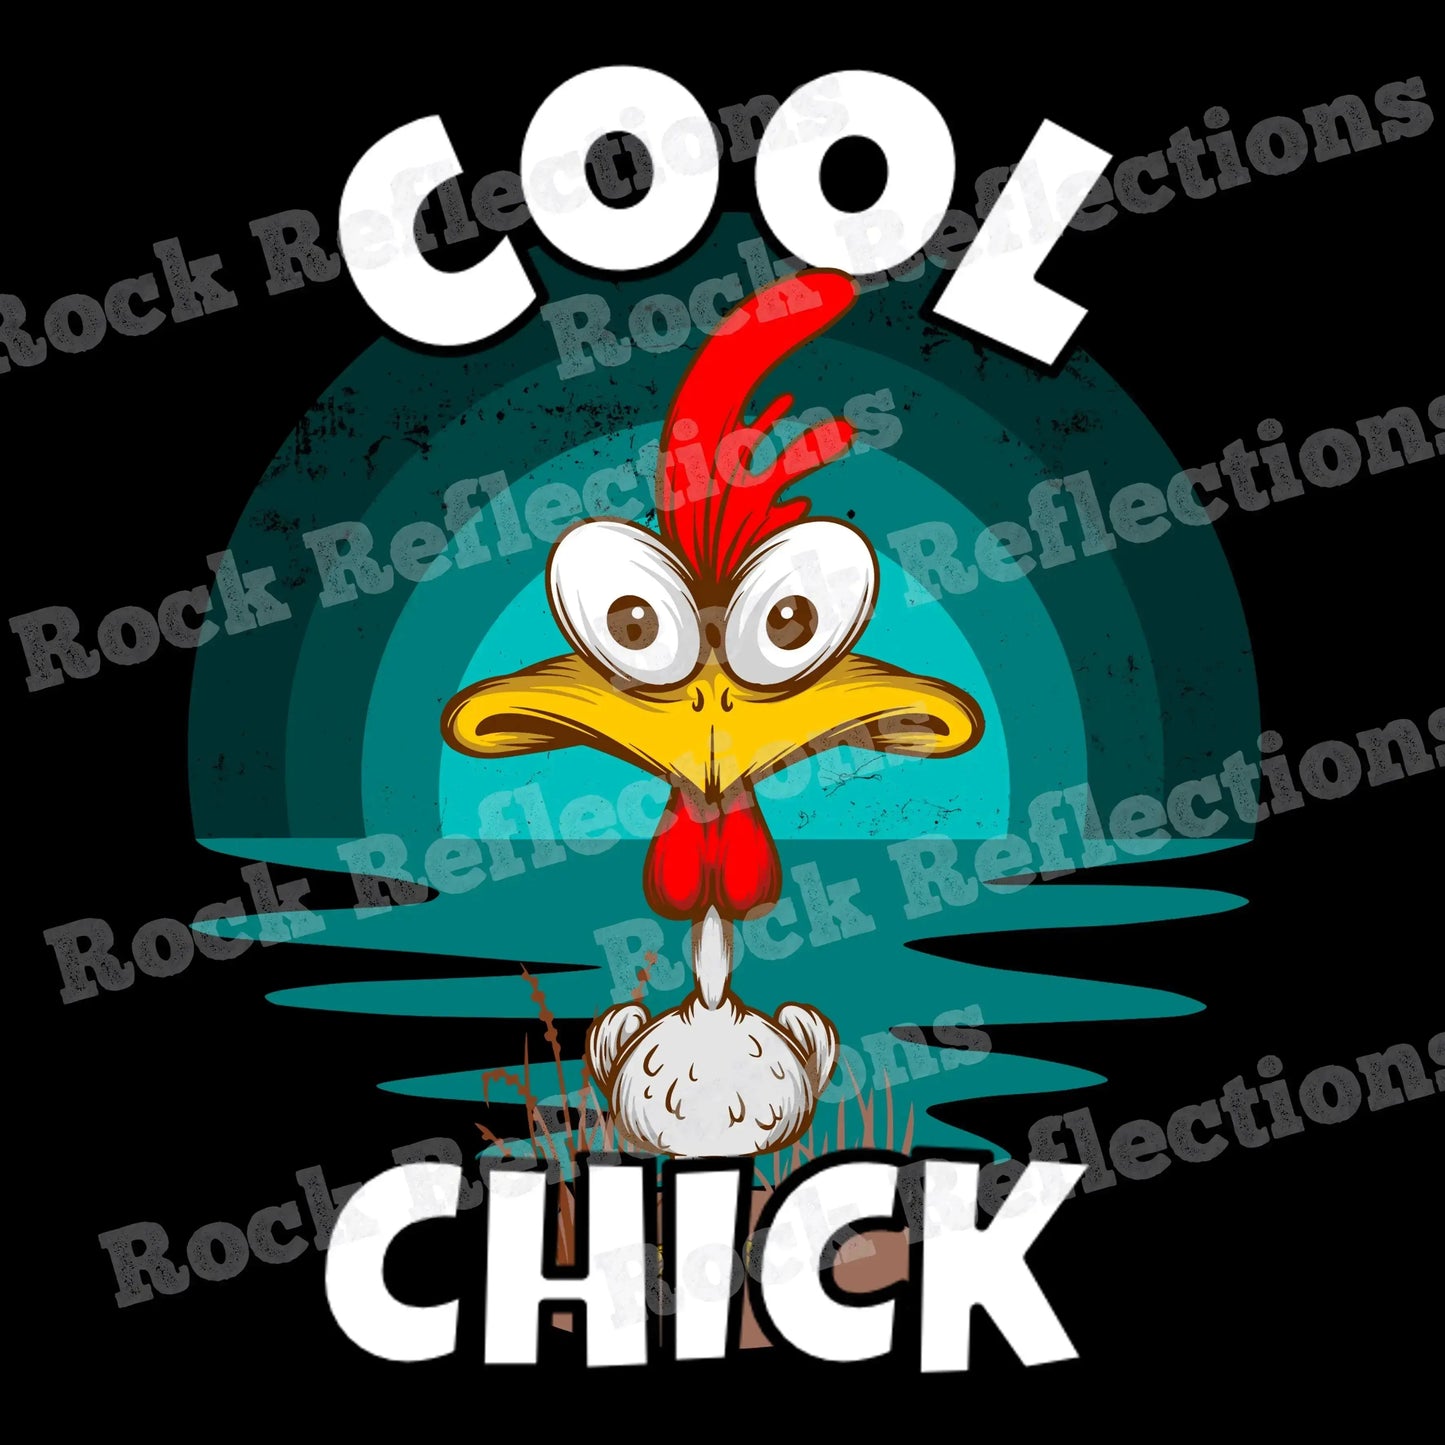 Cool Chick Funny Chicken SPOD